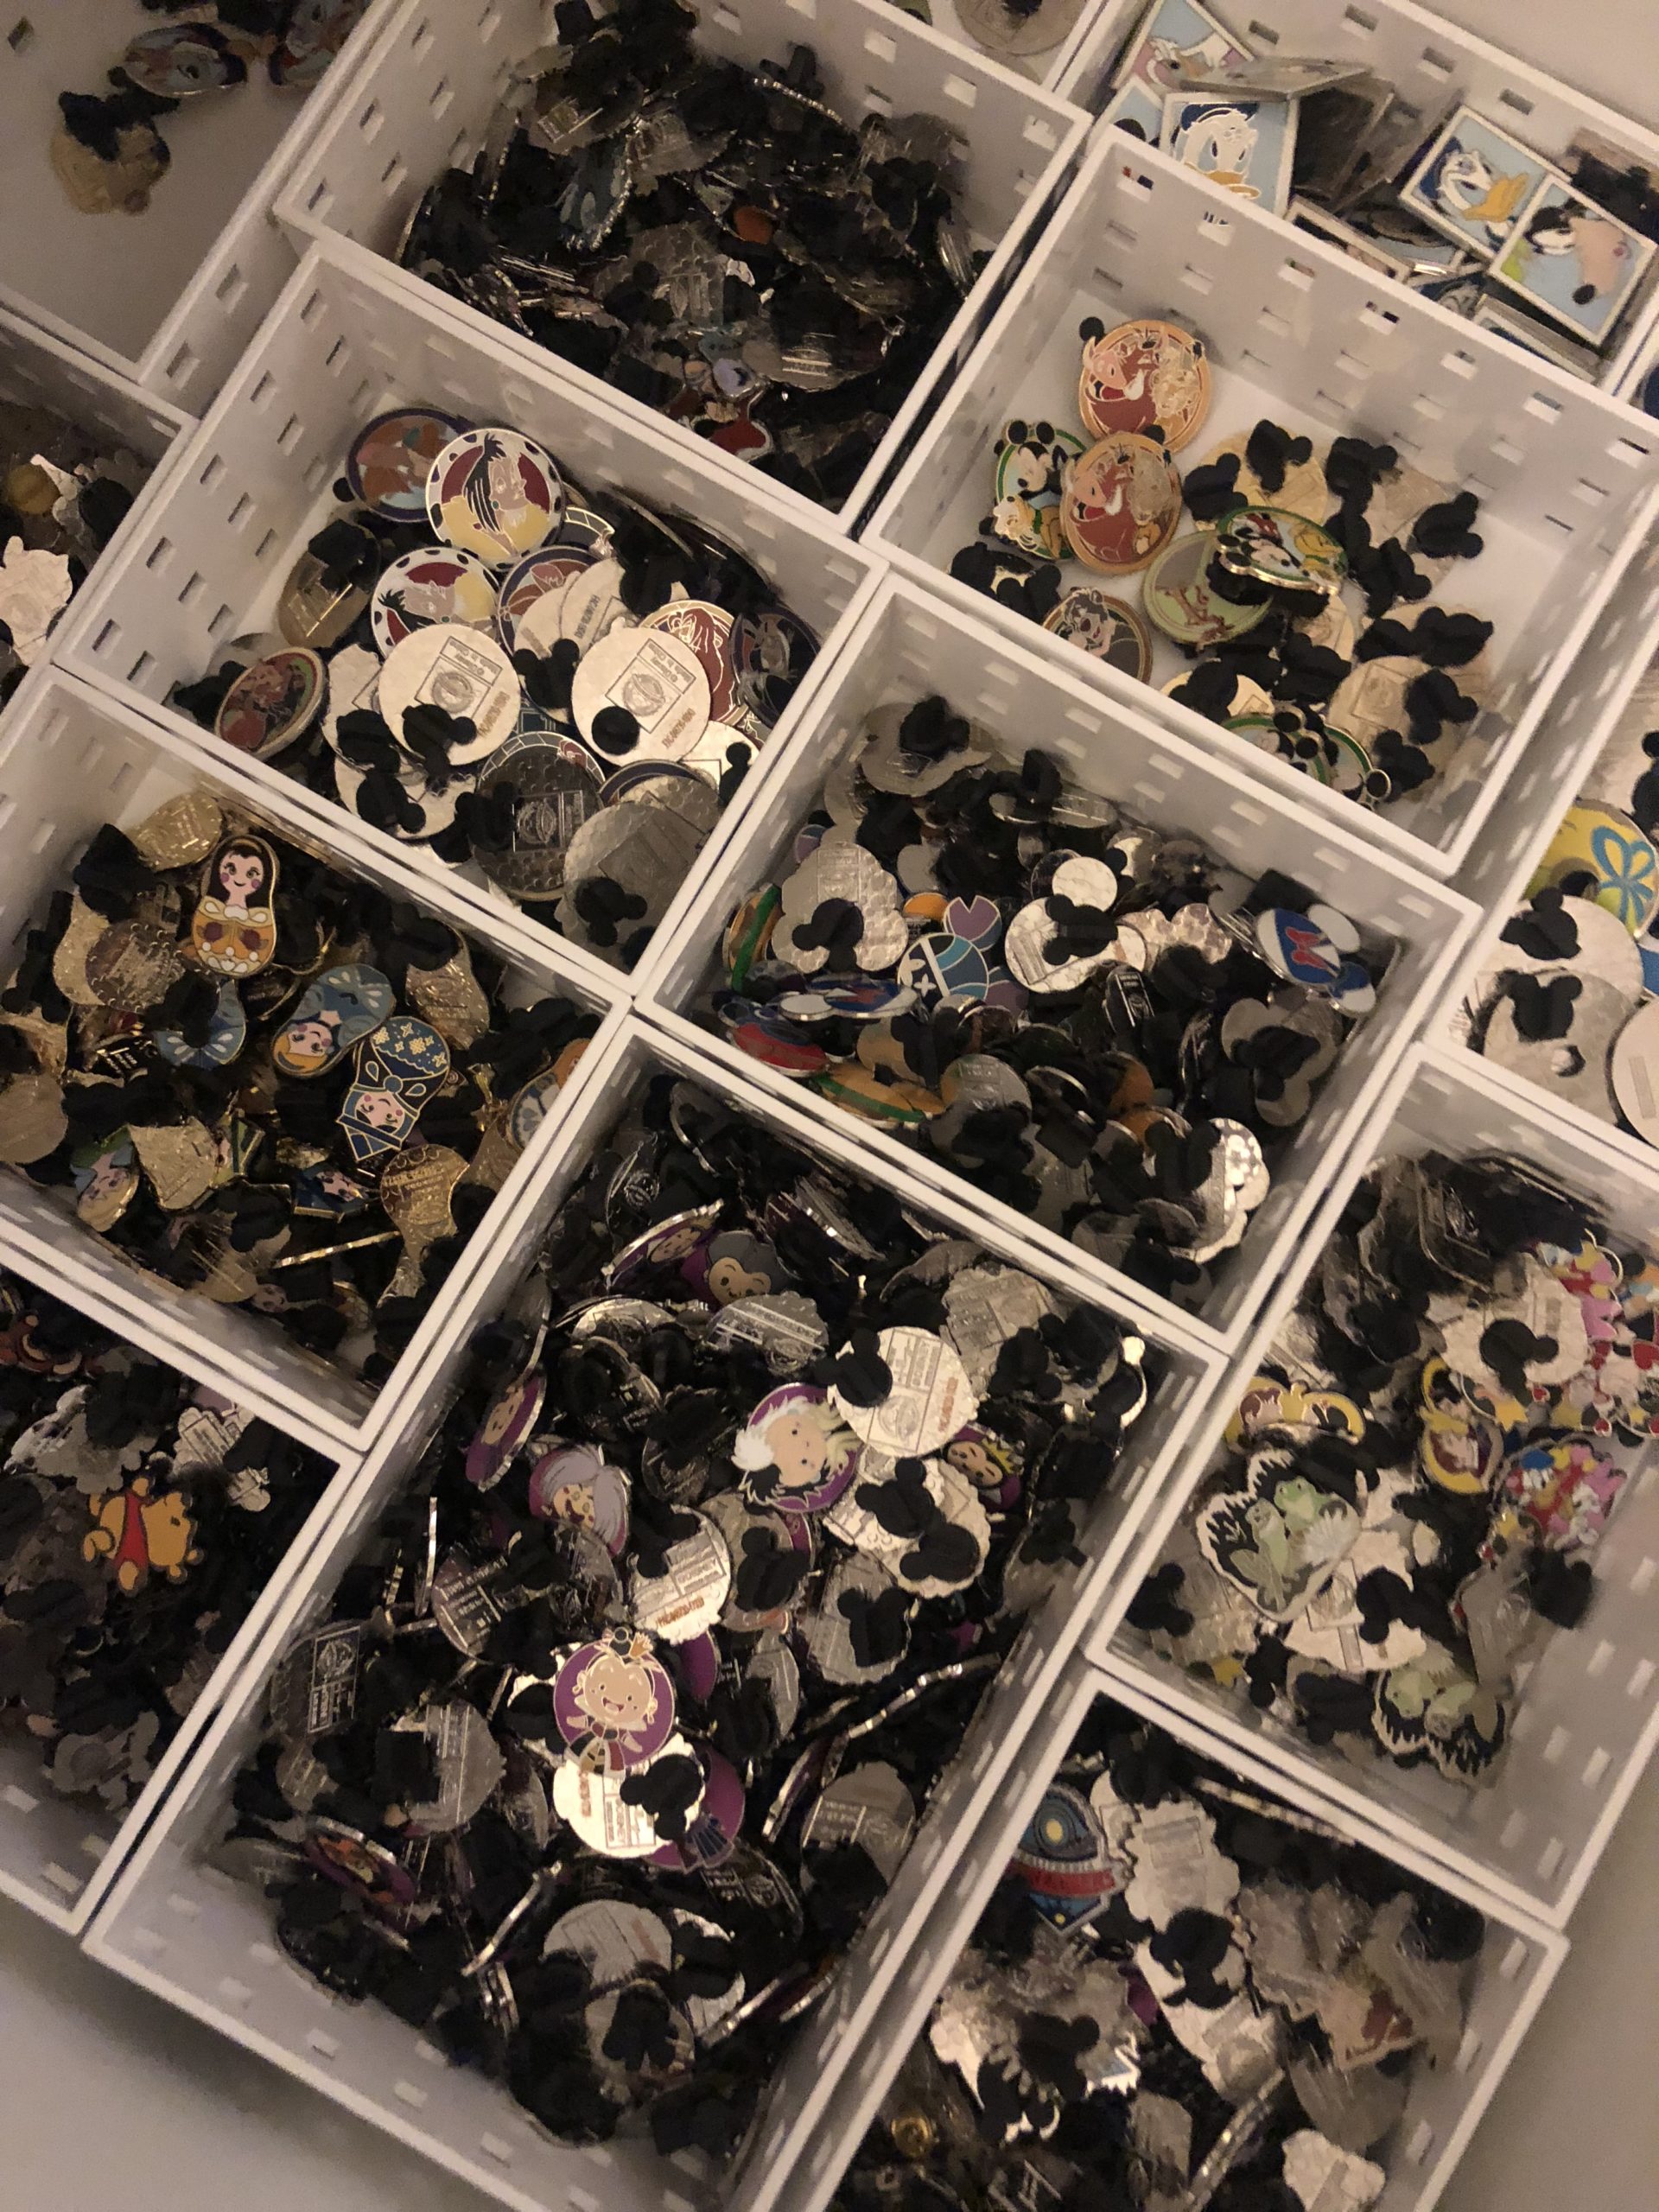 10 Pin - Disney Pin Grab Bag - 100% Authentic - Trade w/ Cast Members -  Collect Random Pins